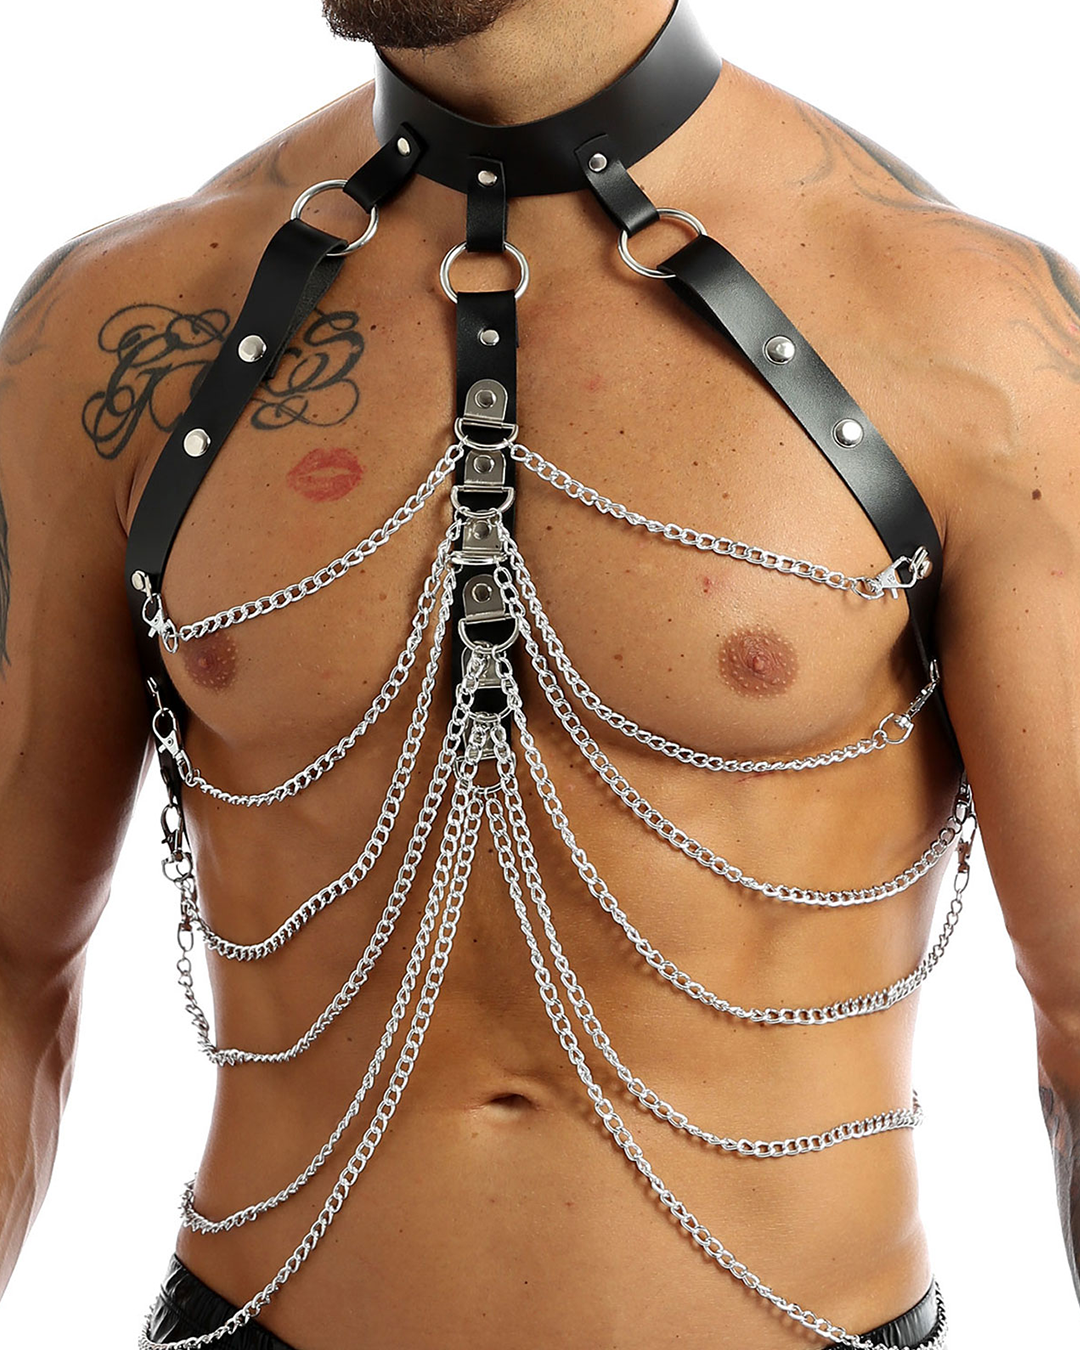 Chain Holder Harnesses